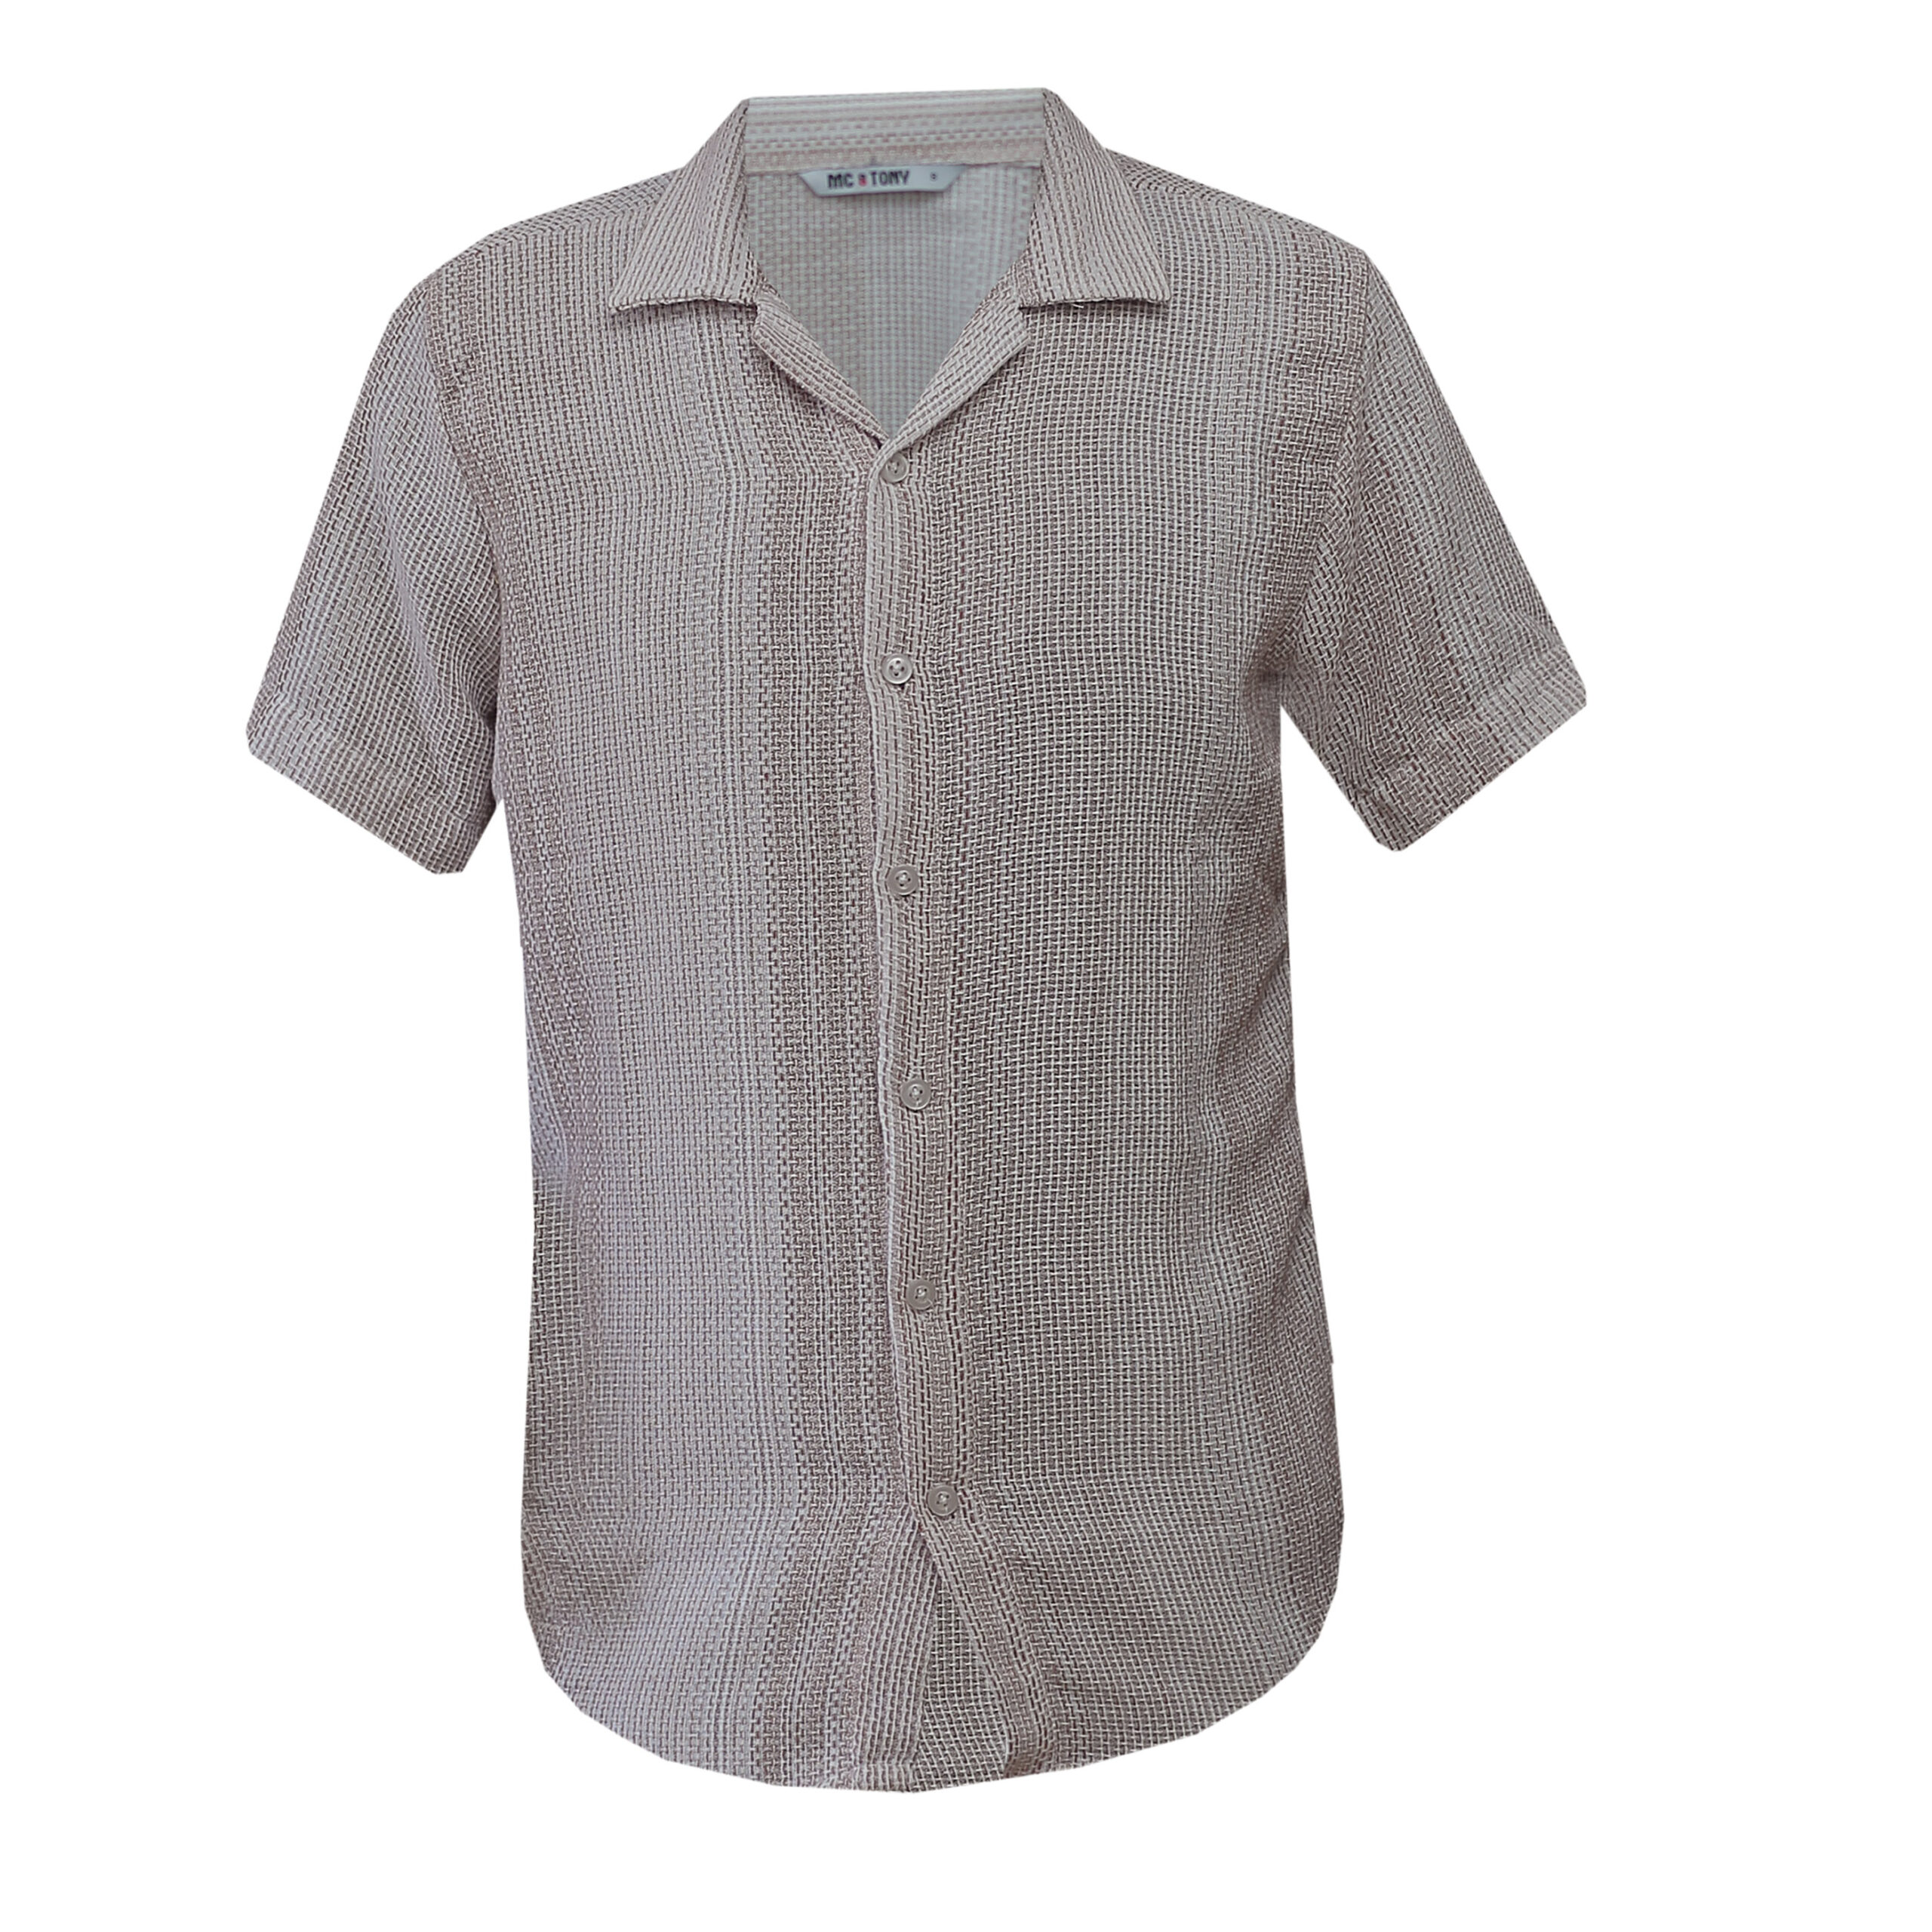 Men's Casual Shirt - Short Sleeve